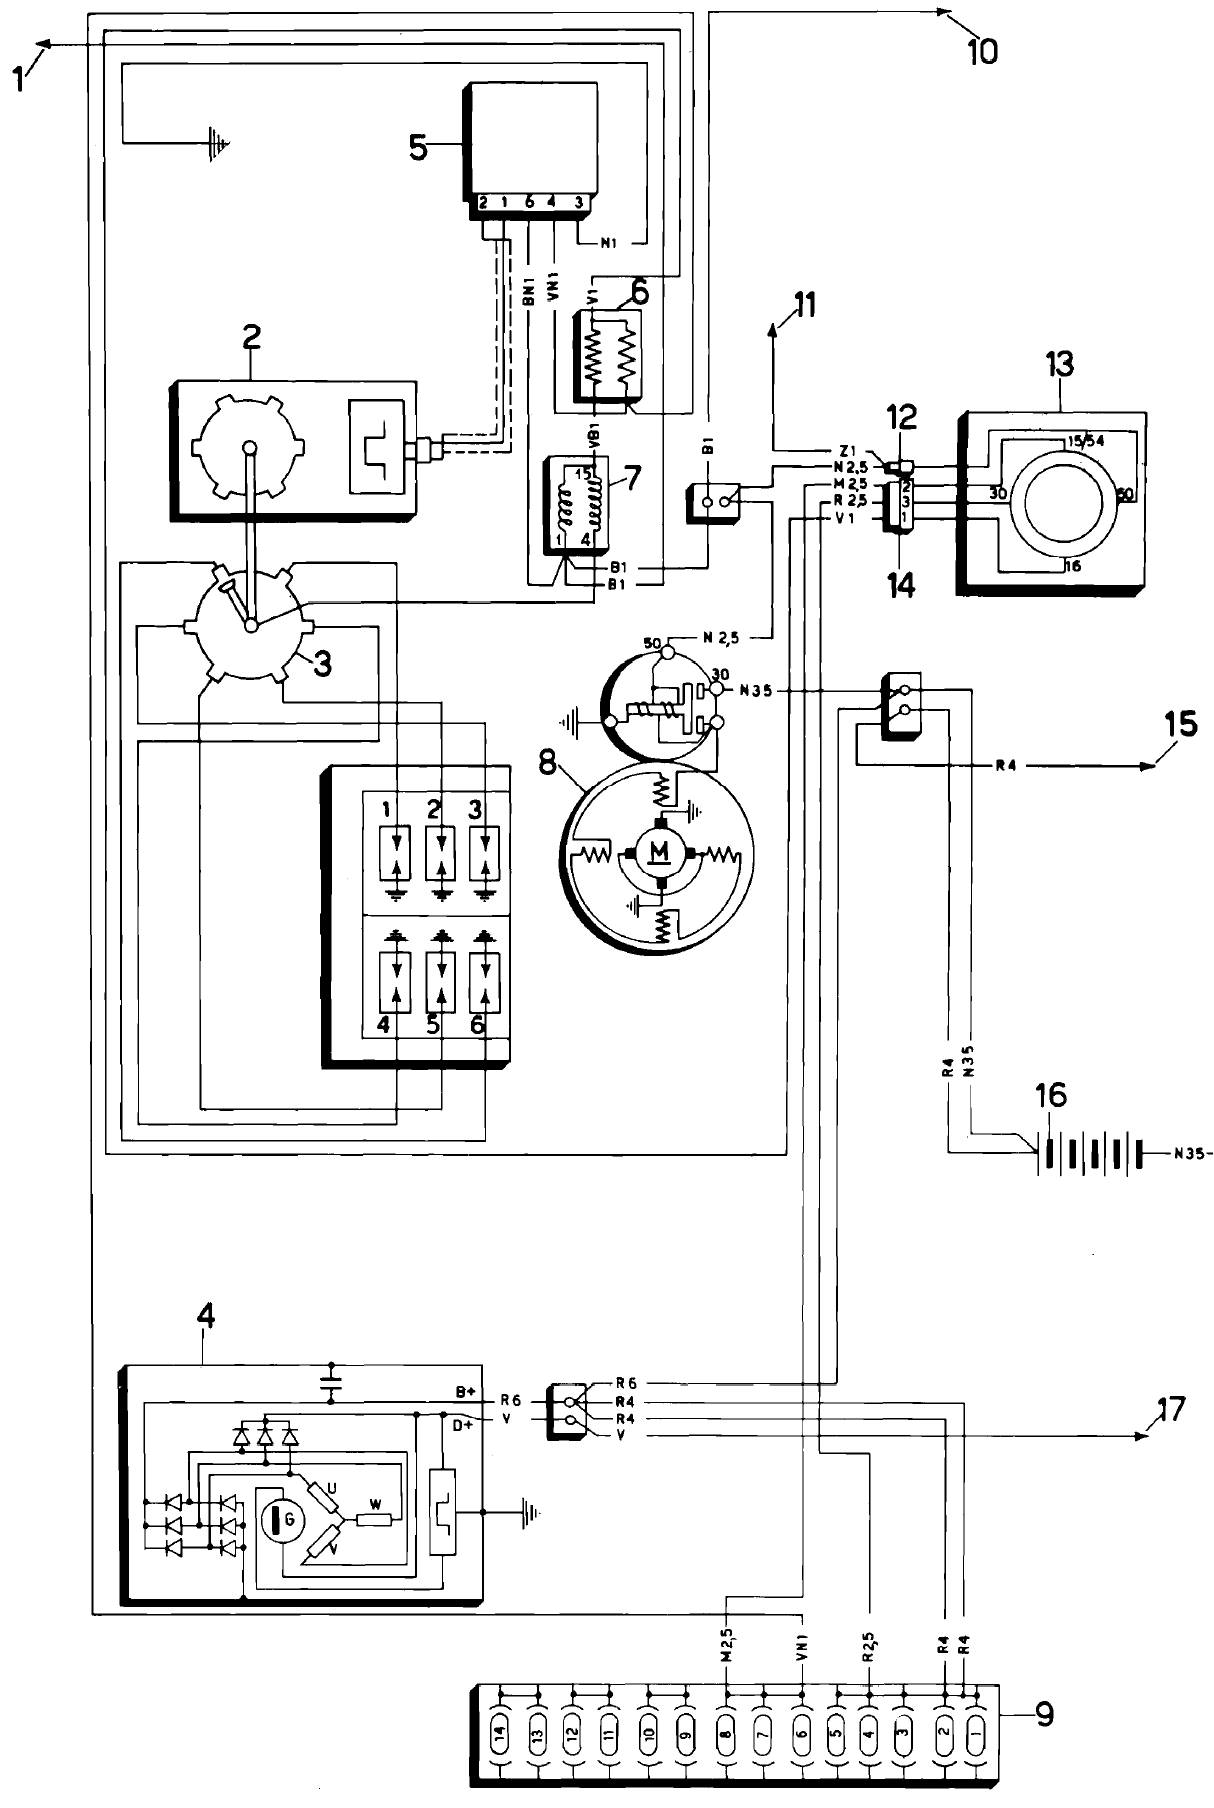 GTV6 ignition wiring diagram